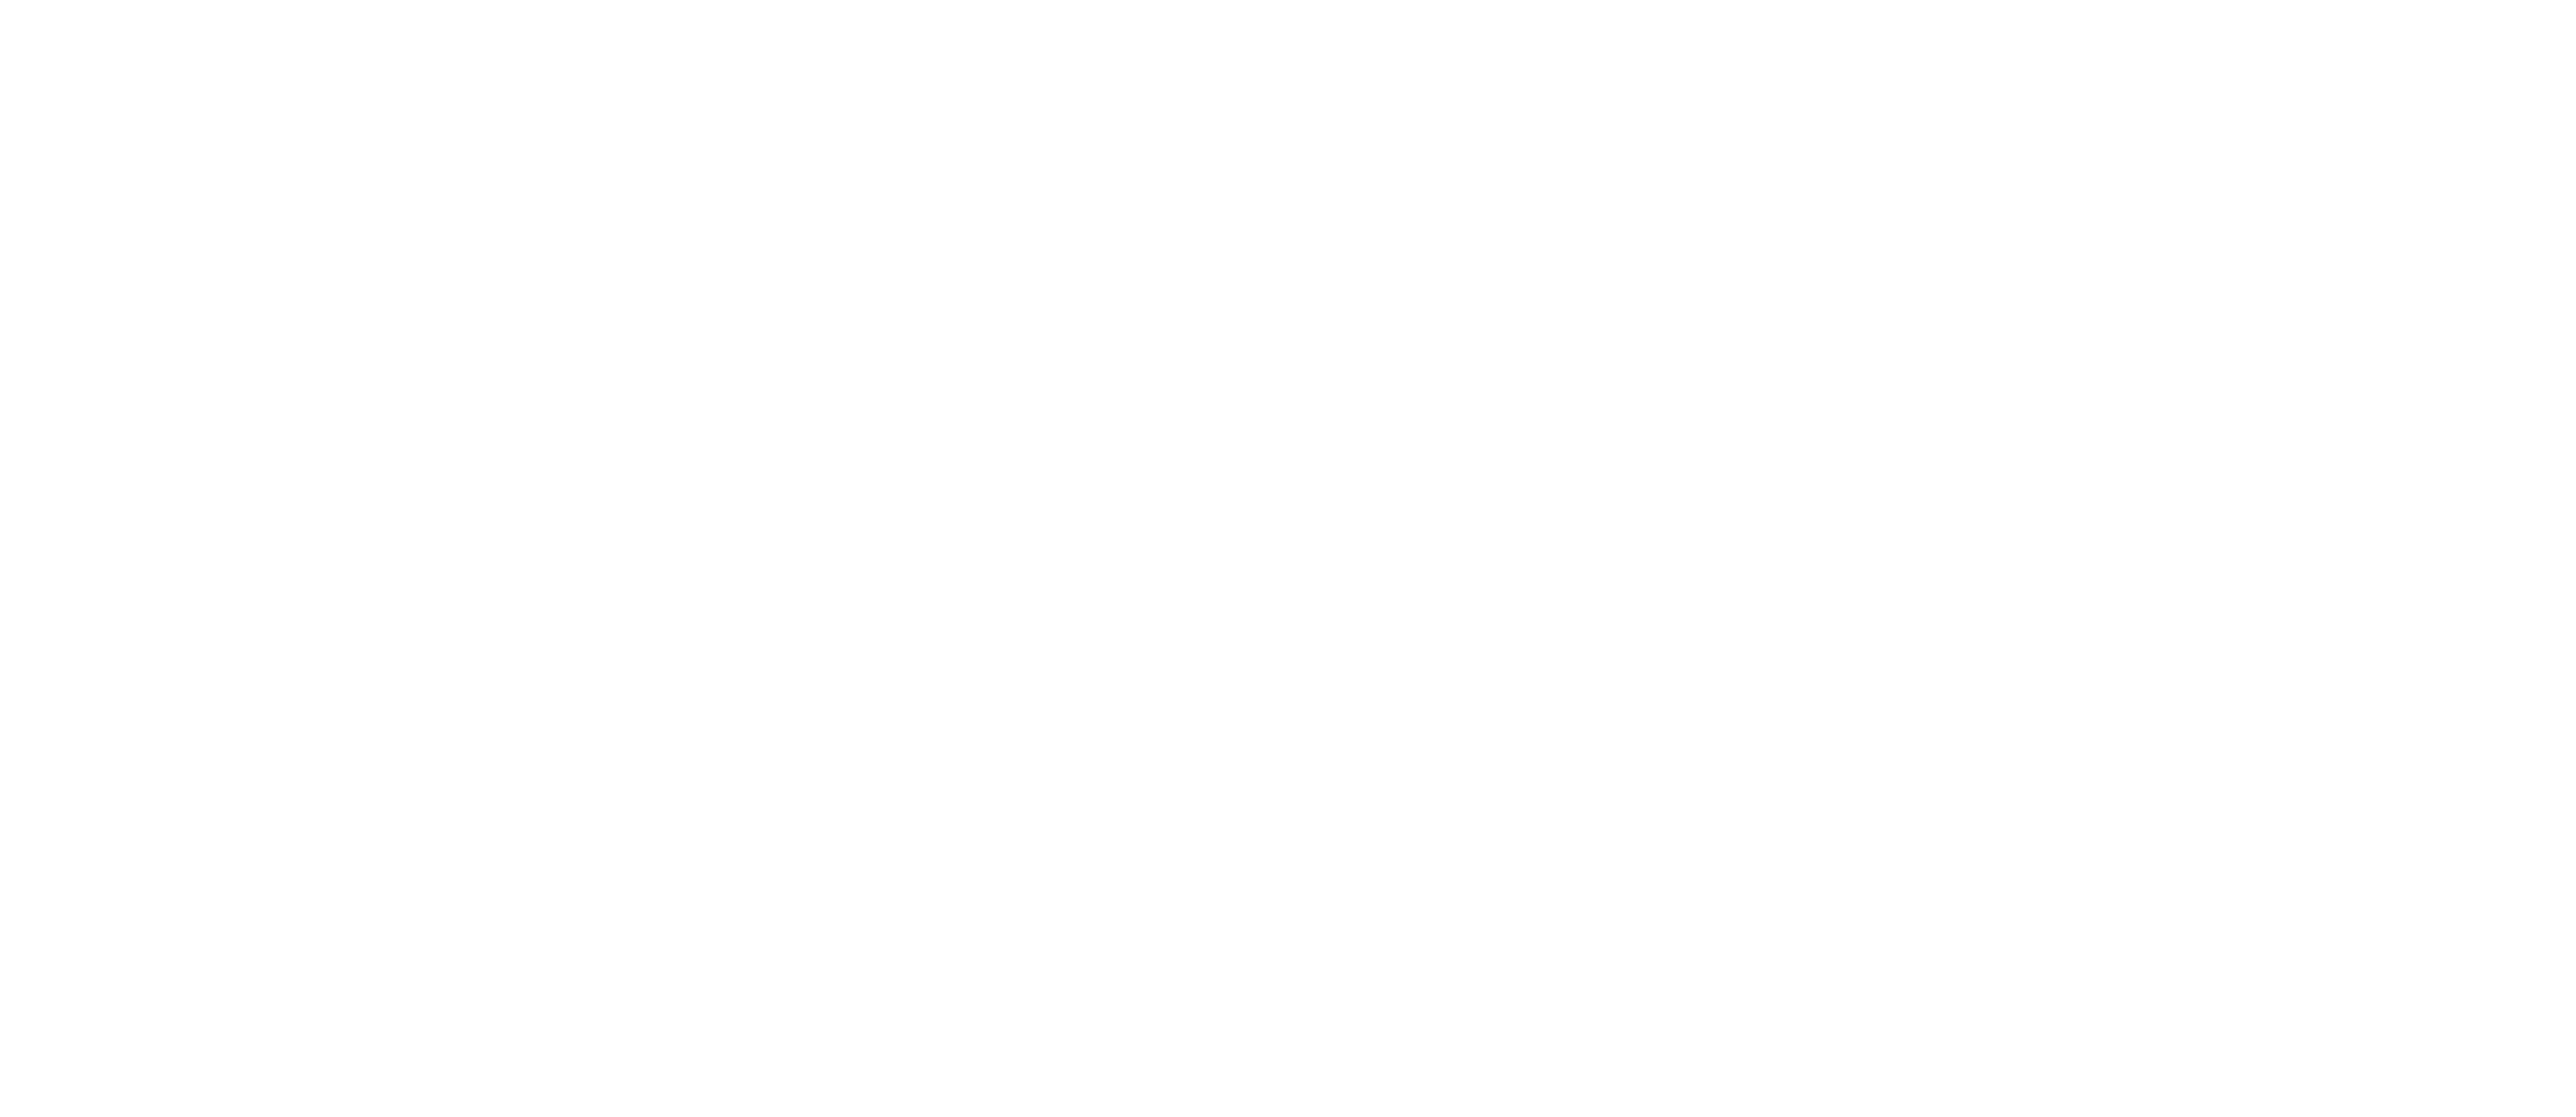 Vitae Financial Recruitment